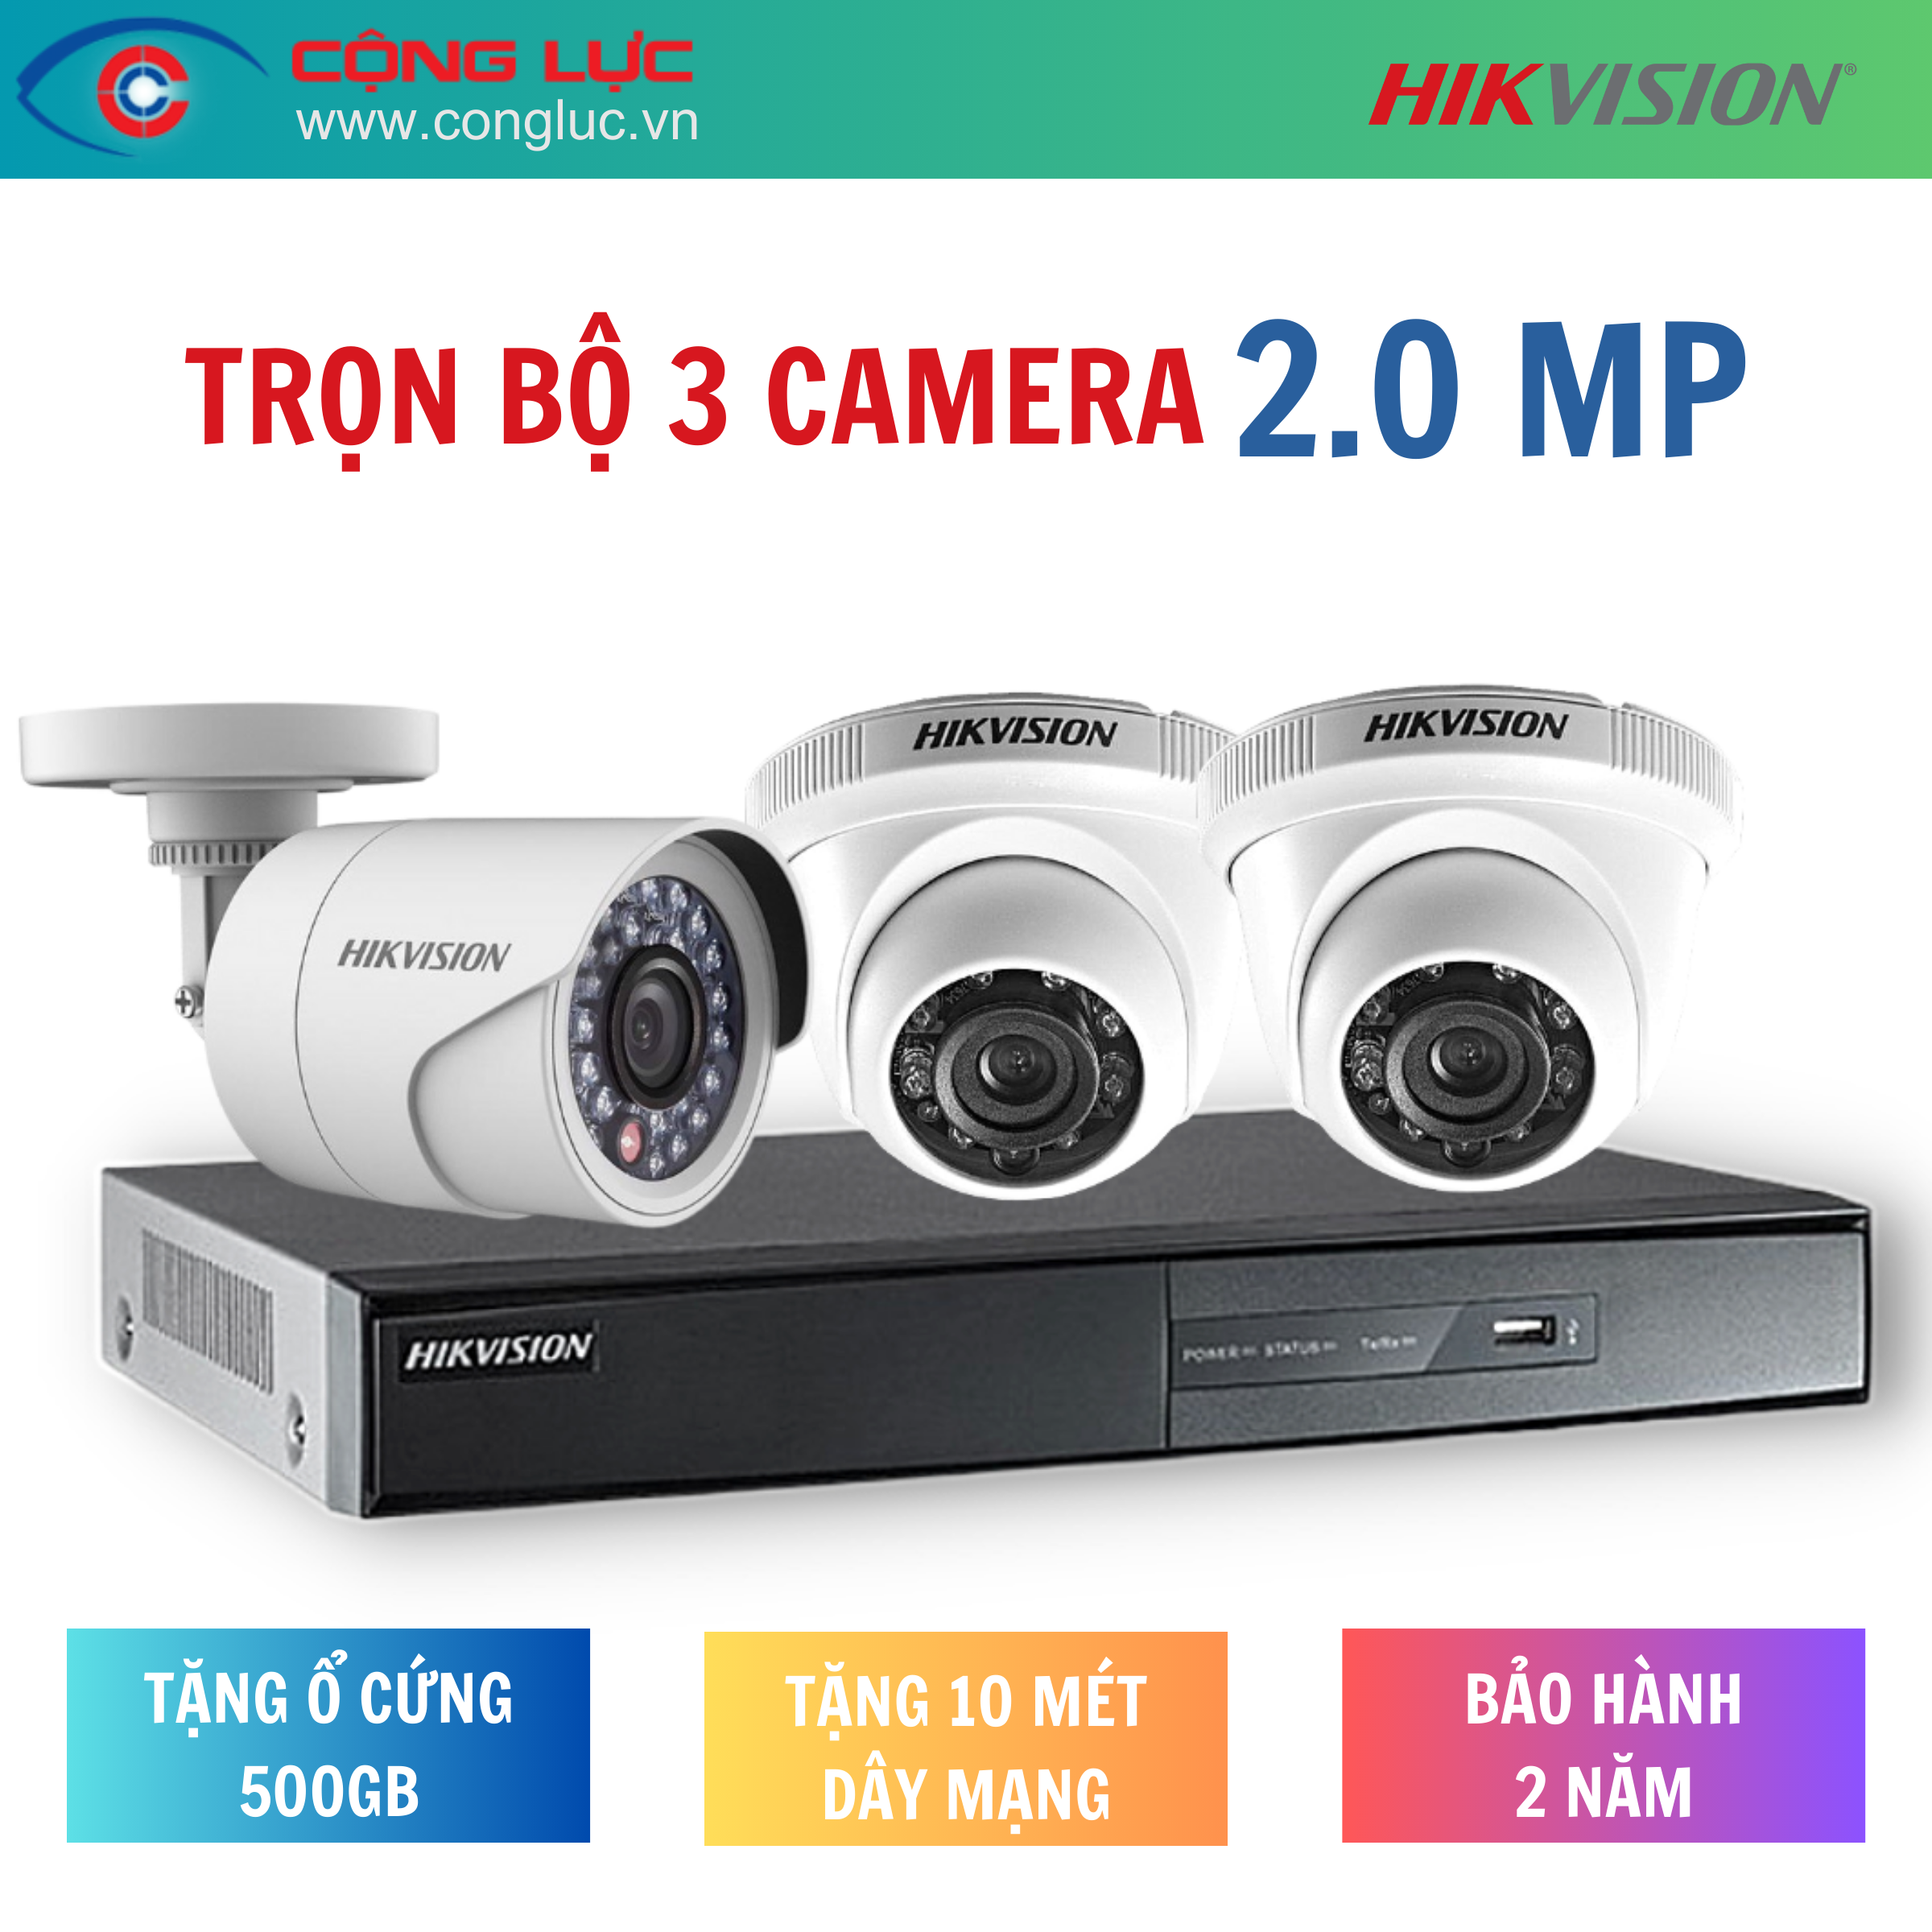 Trọn bộ 3 Camera Hikvision 2.0MP